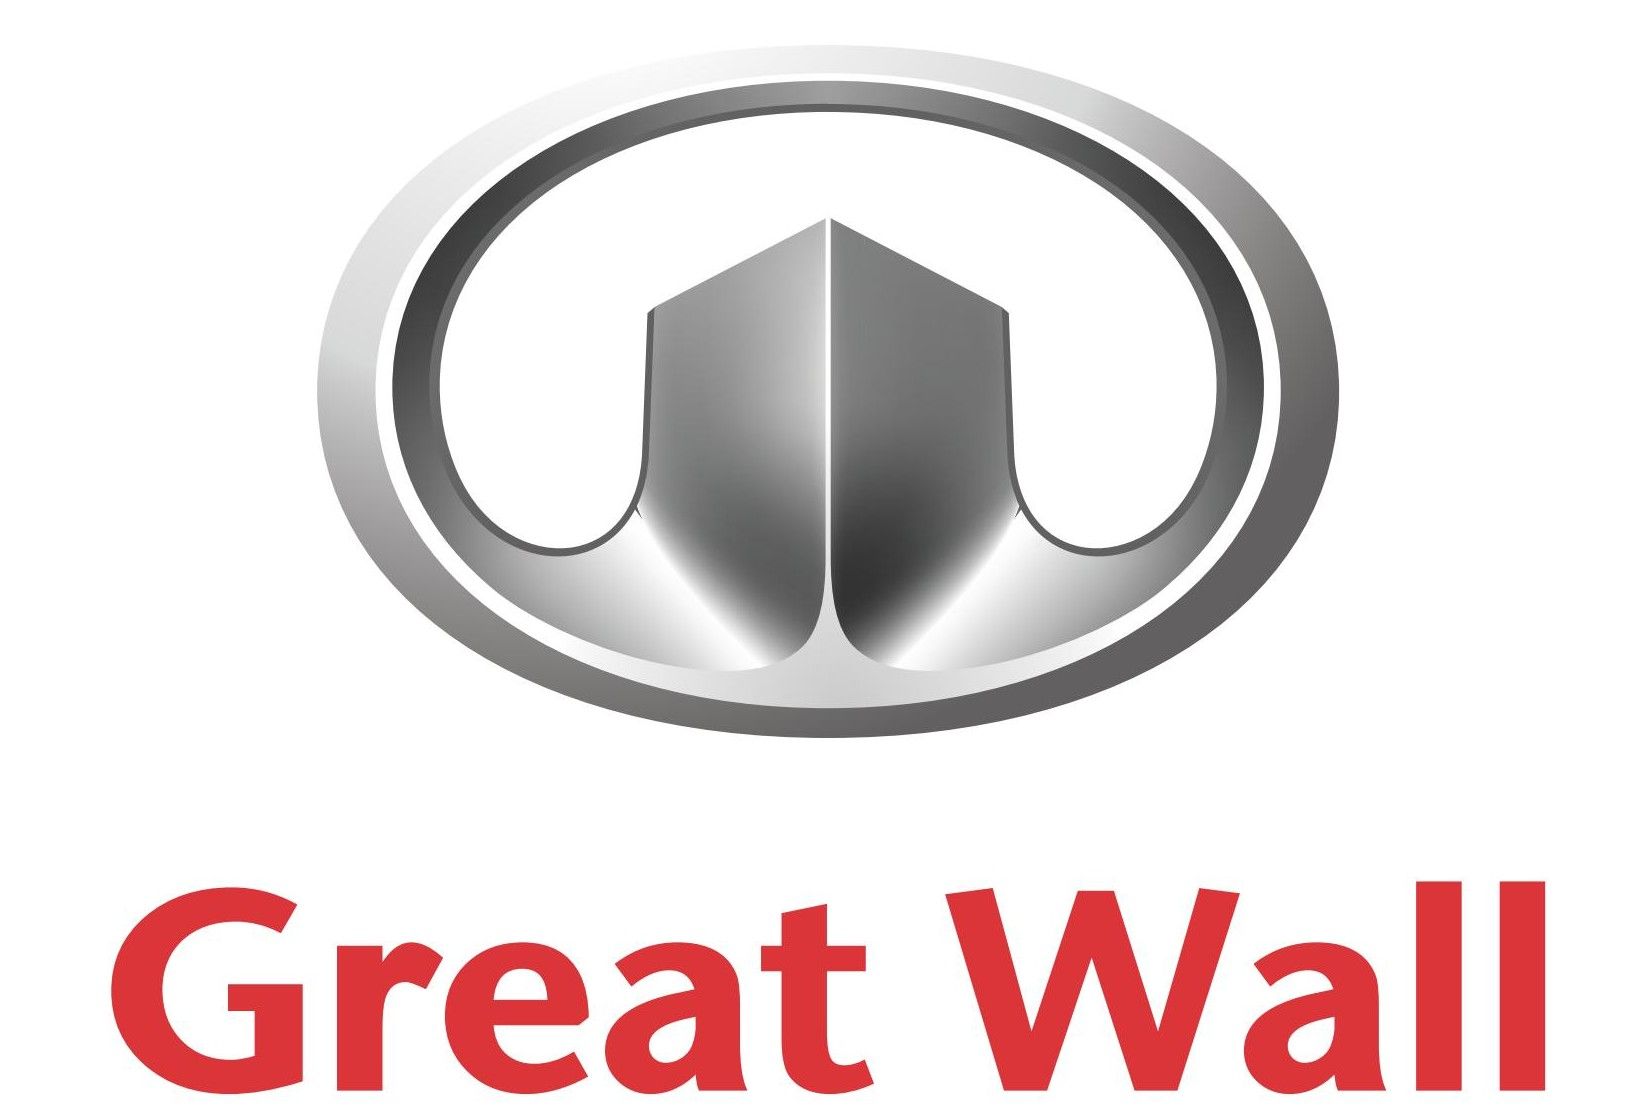 Great wall logo